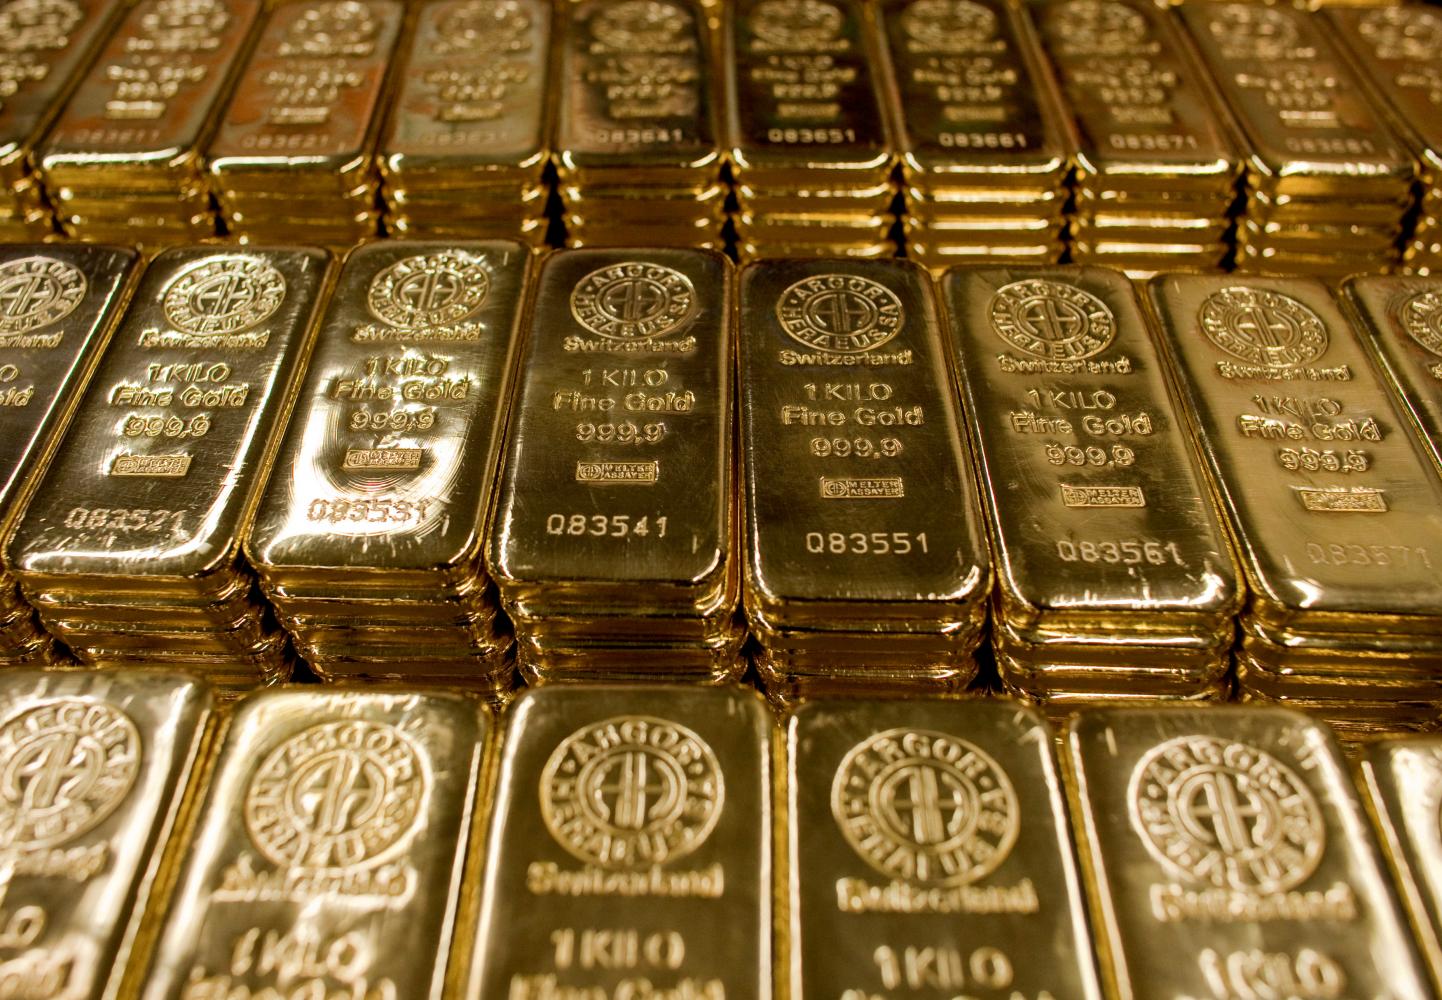 April, 16 - Gold looks capped near $1,750/oz